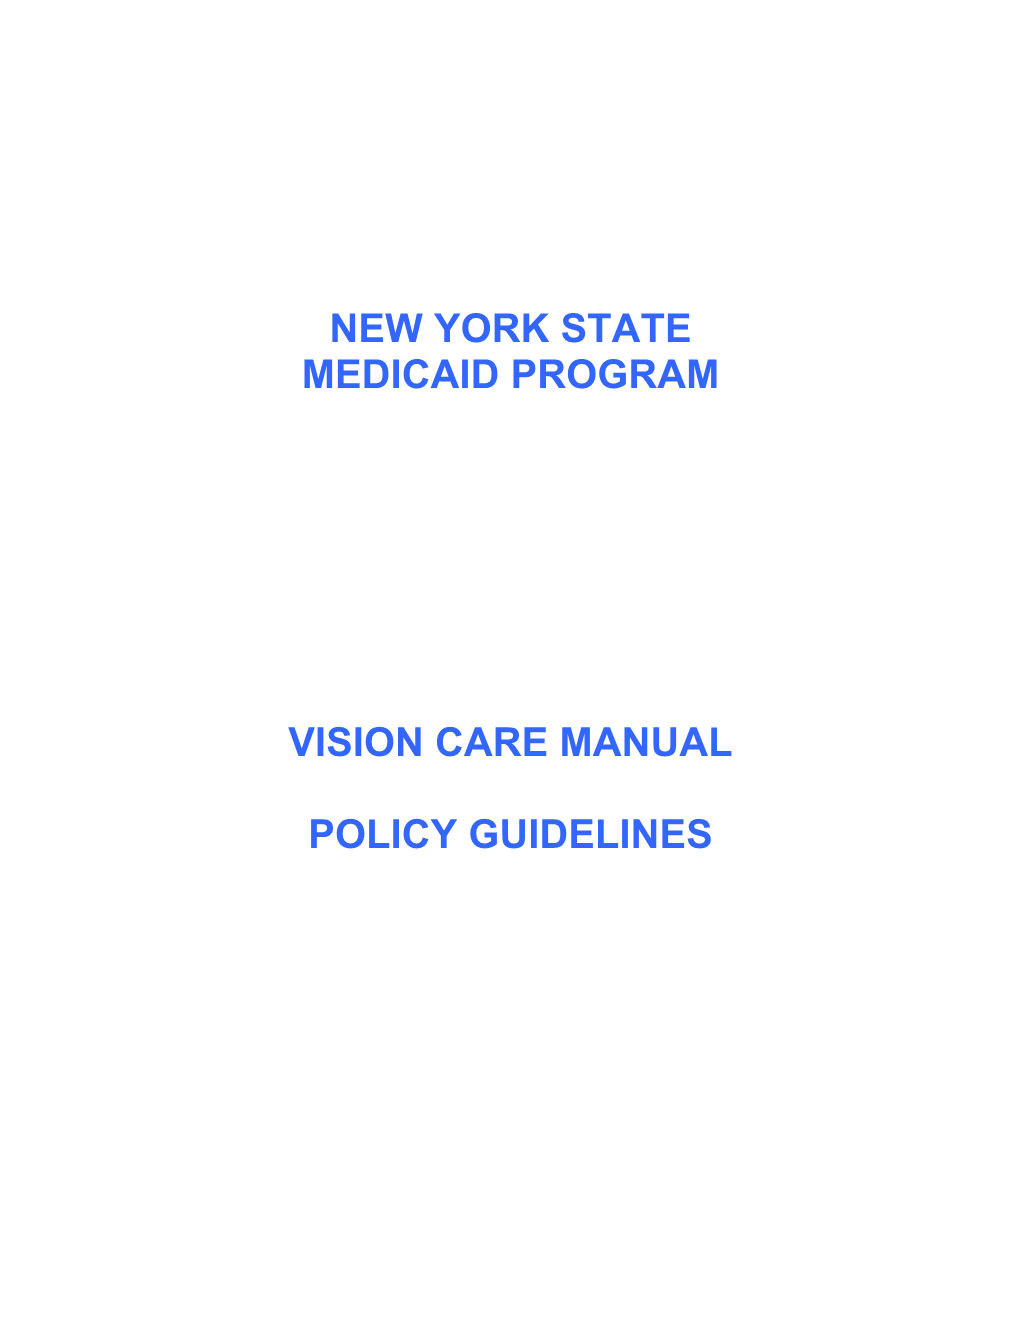 New York State Medicaid Program Vision